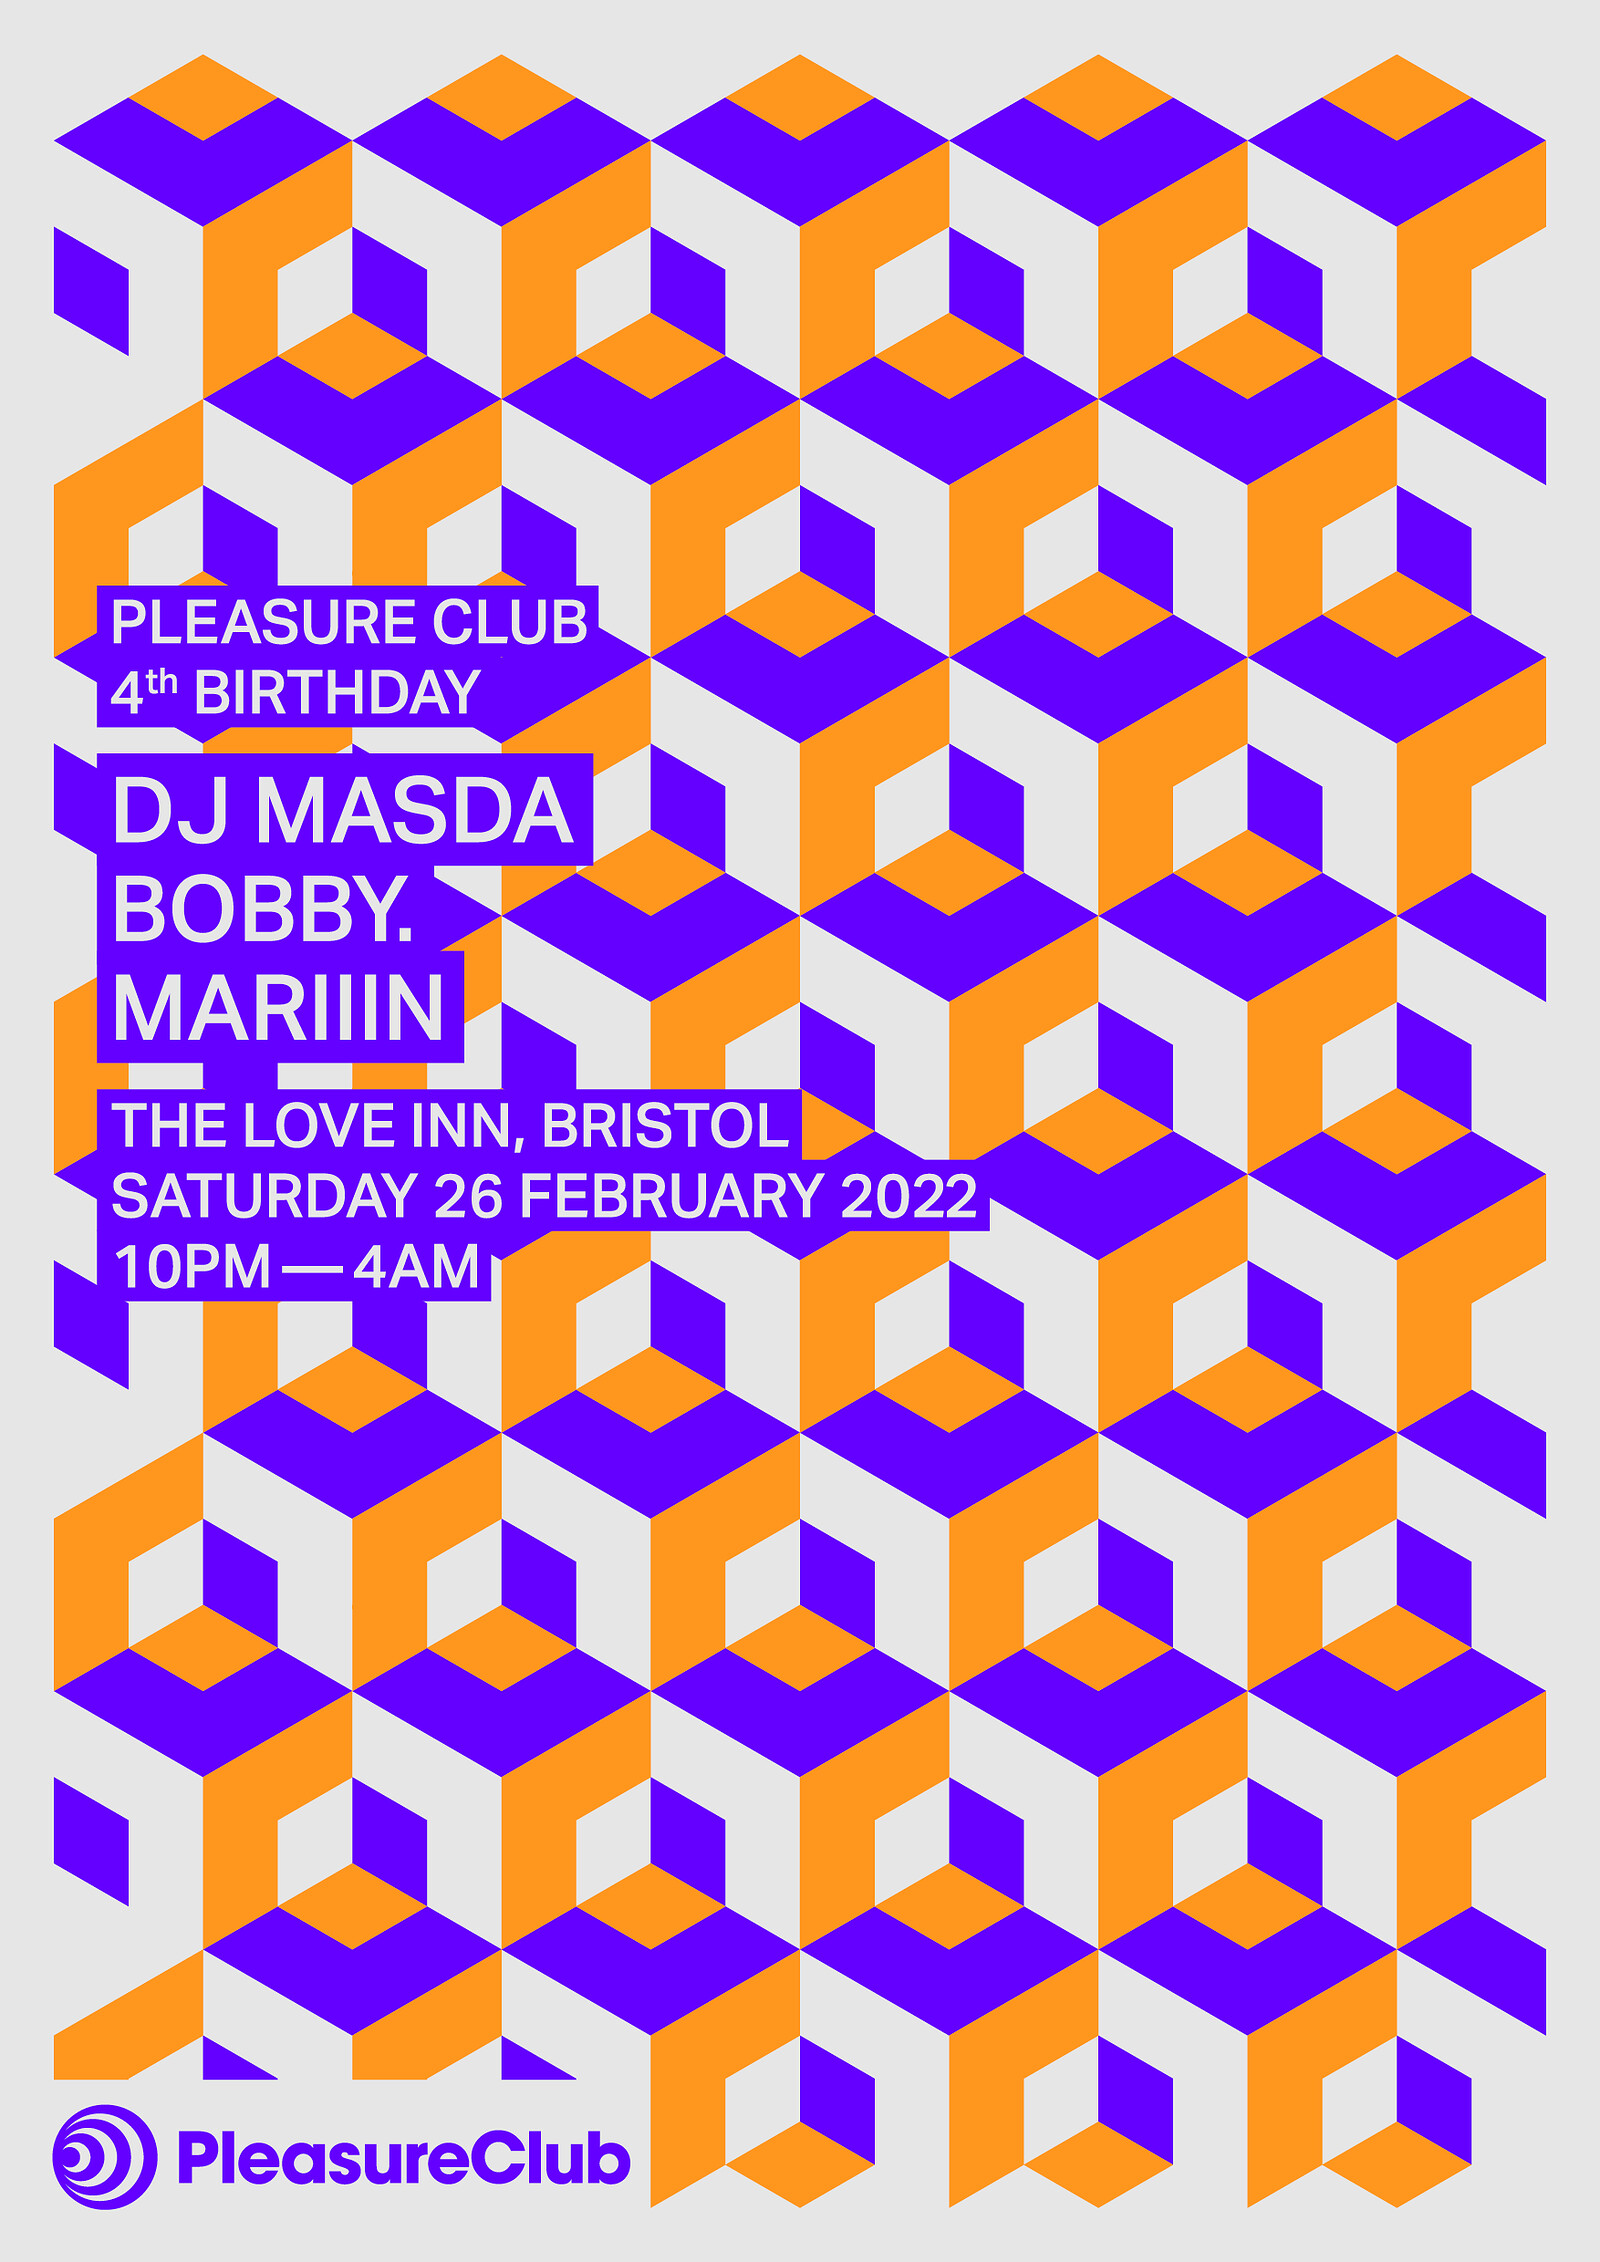 Pleasure Club 4th Birthday w/ DJ Masda at The Love Inn